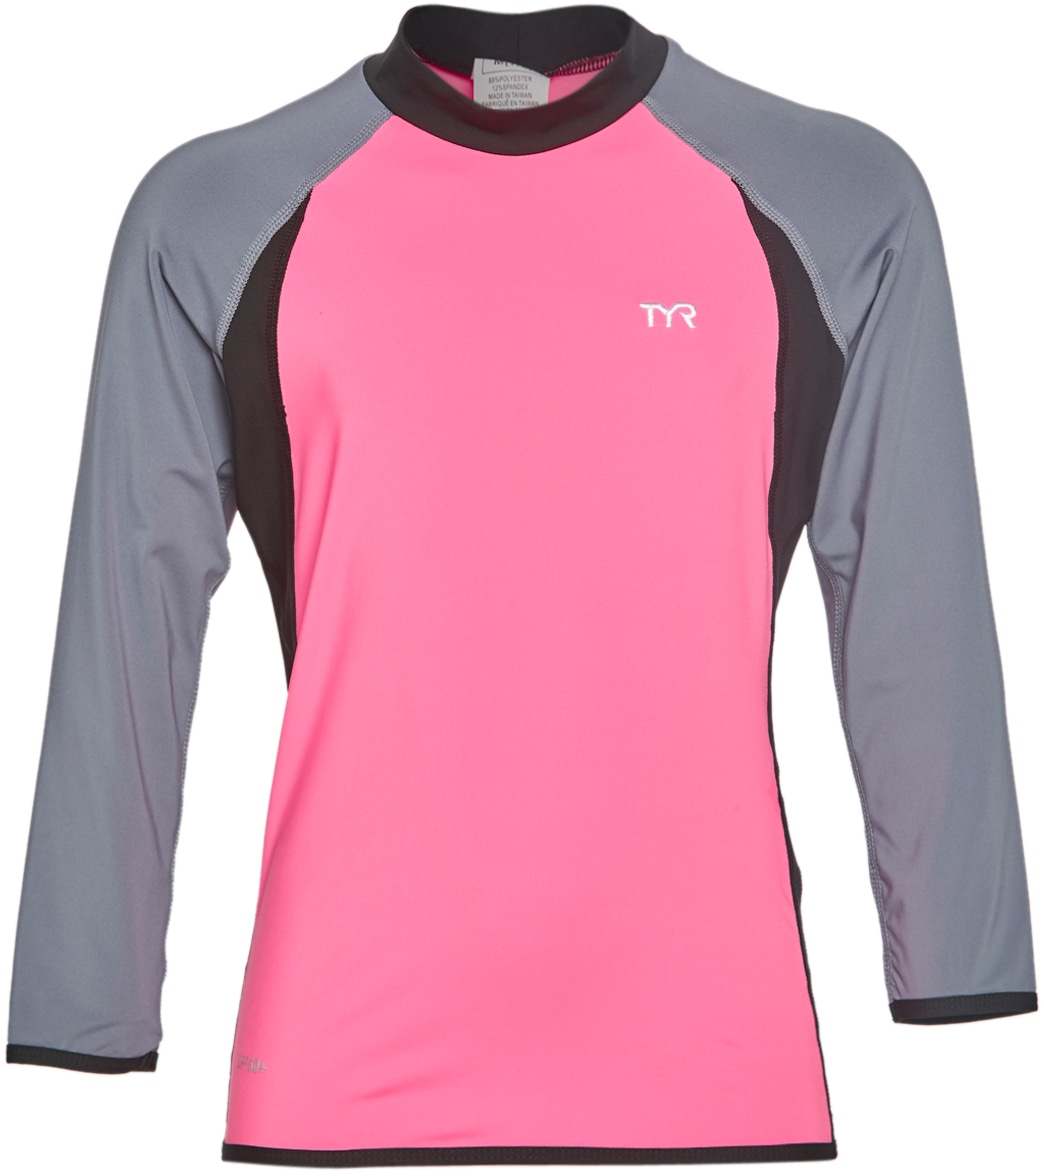 TYR Girls' Upf 50+ Long Sleeve Solid Rashguard - Pink/Grey Small 6/6X - Swimoutlet.com